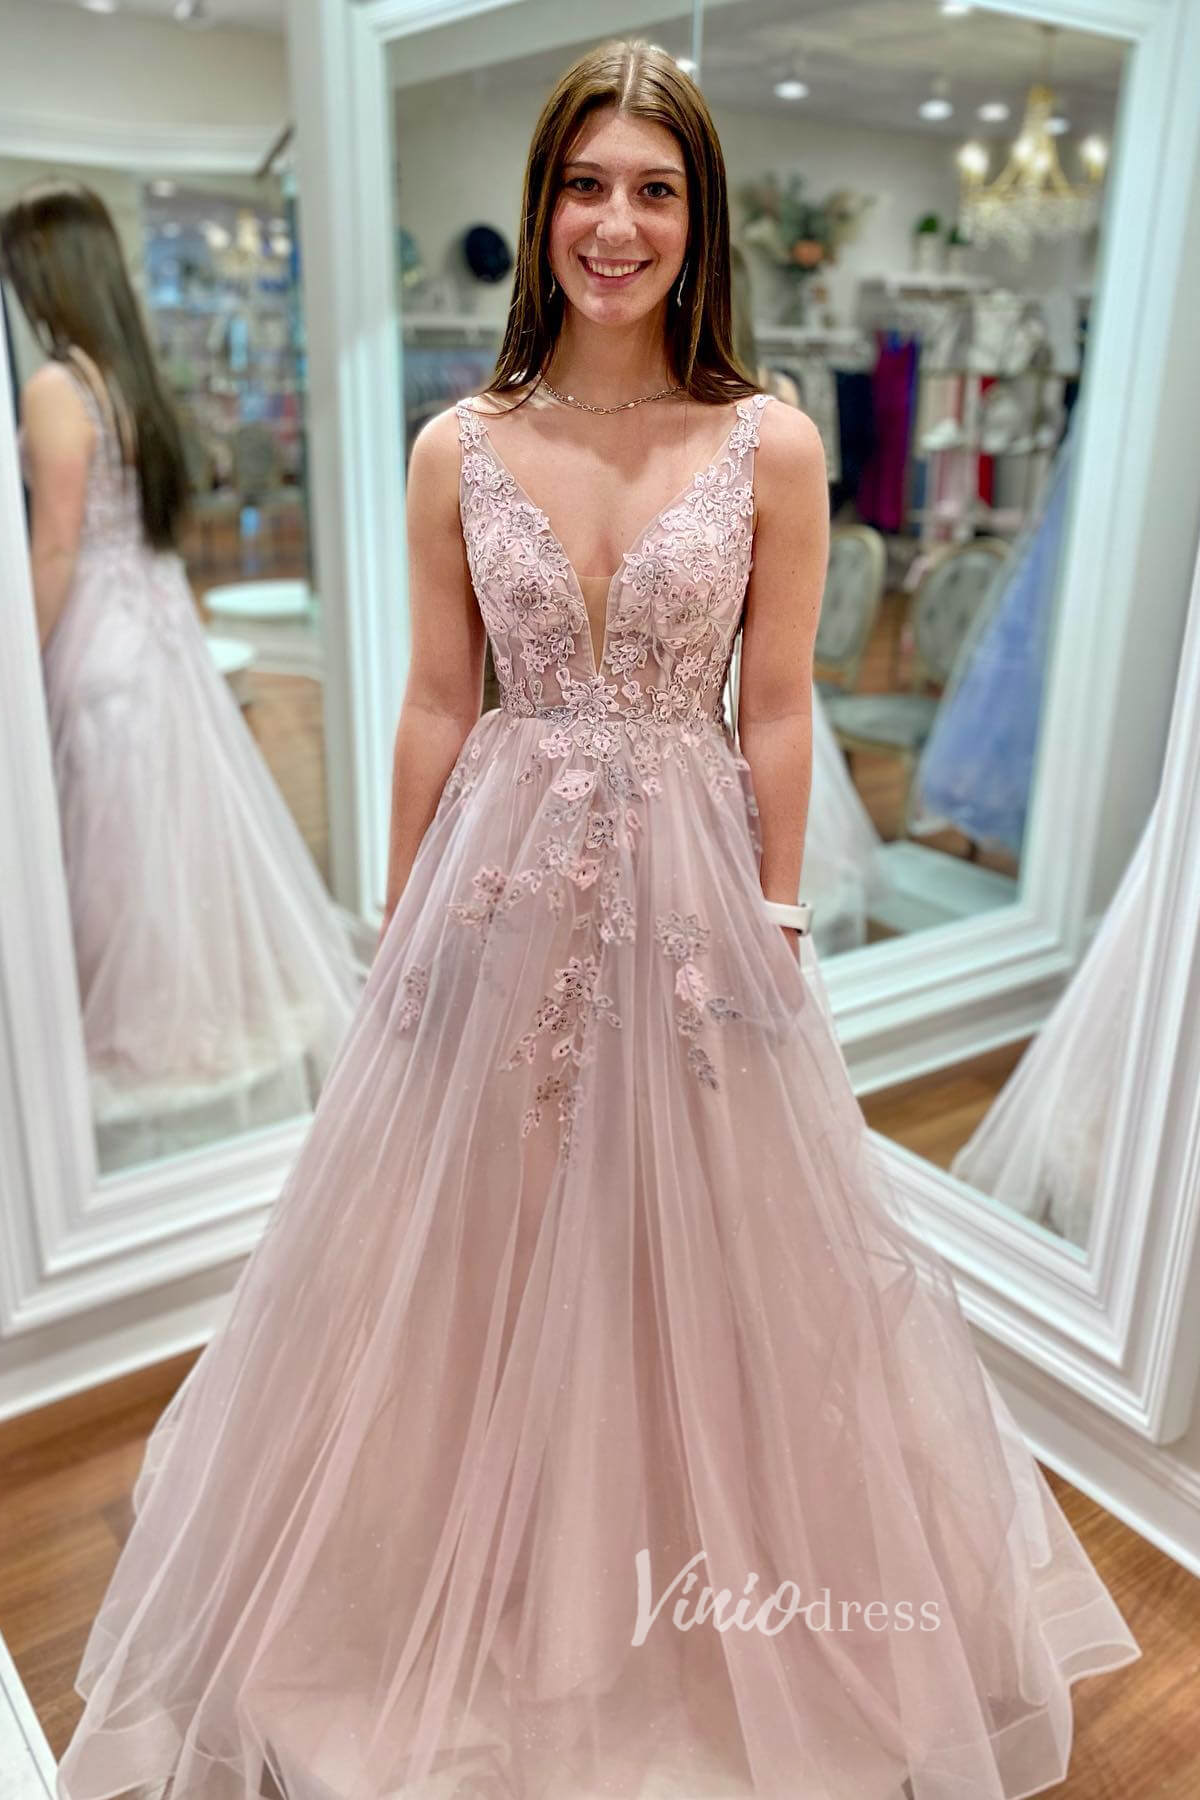 Viniodress Elegant Blush Lace Applique Prom Dress with Plunging V-Neck FD3468 Custom Colors / US18W